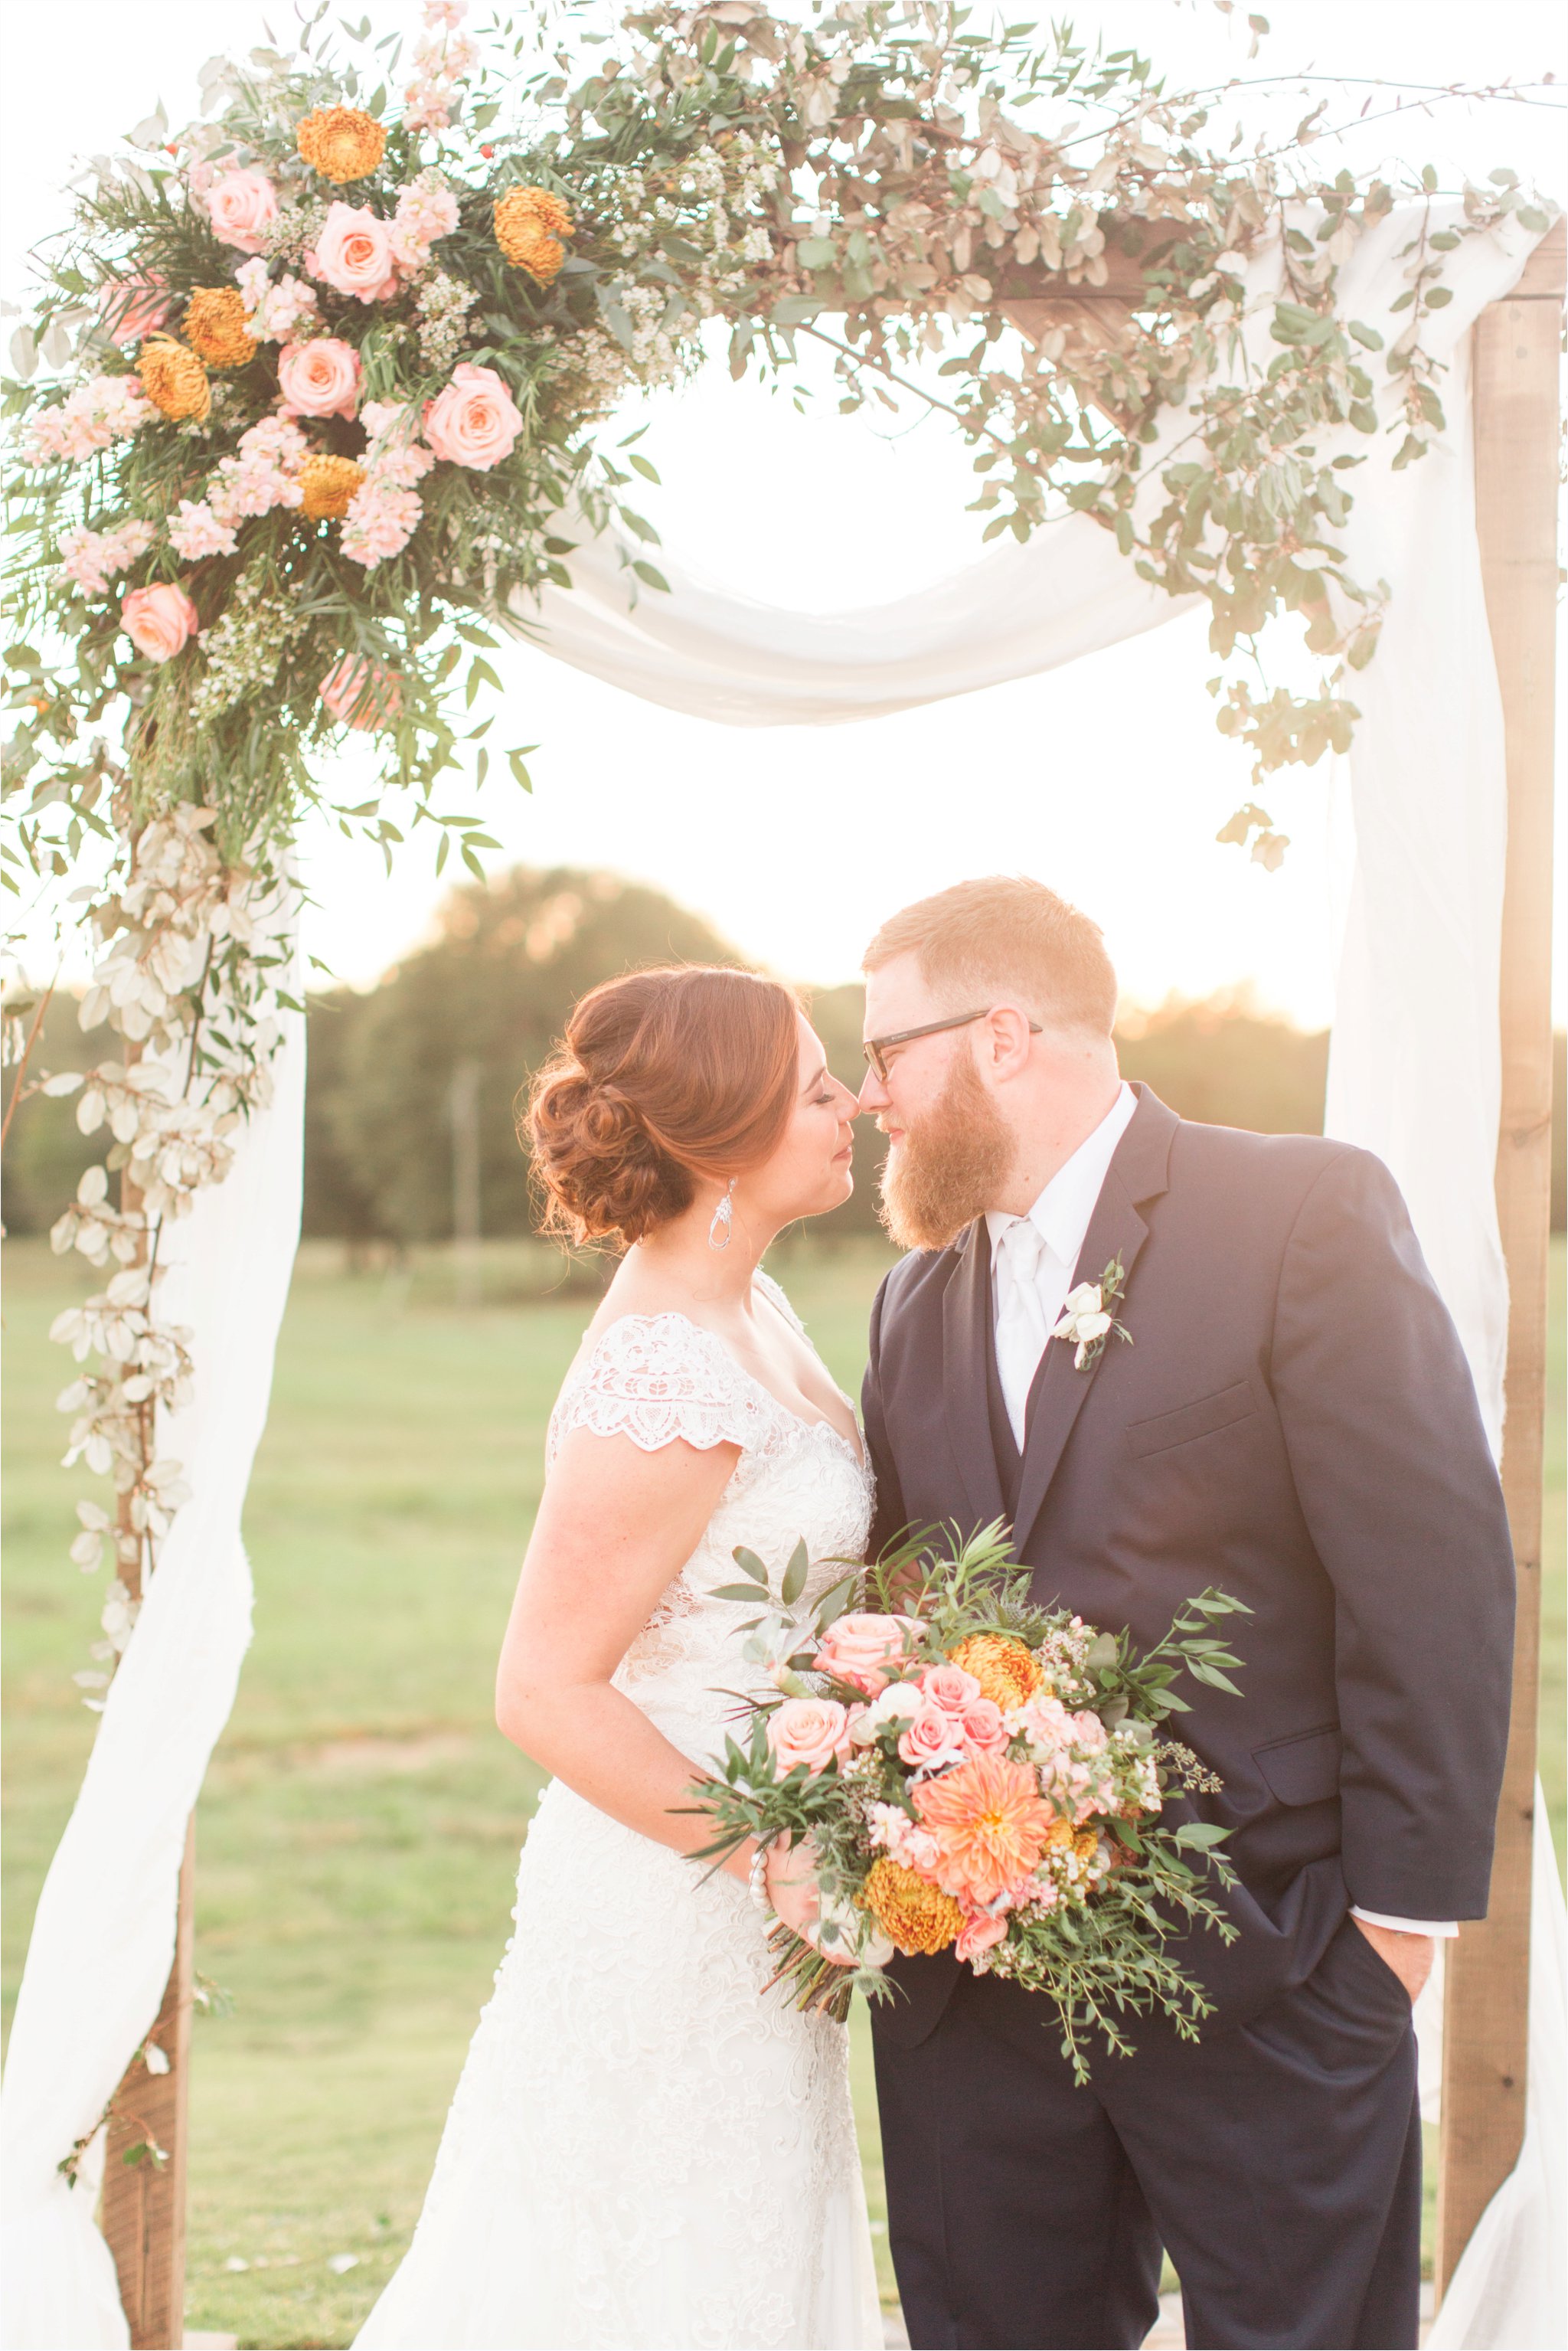 The Barn at Sitton Hill Farm Wedding | South Carolina Wedding Photographer | Christa Rene Photography